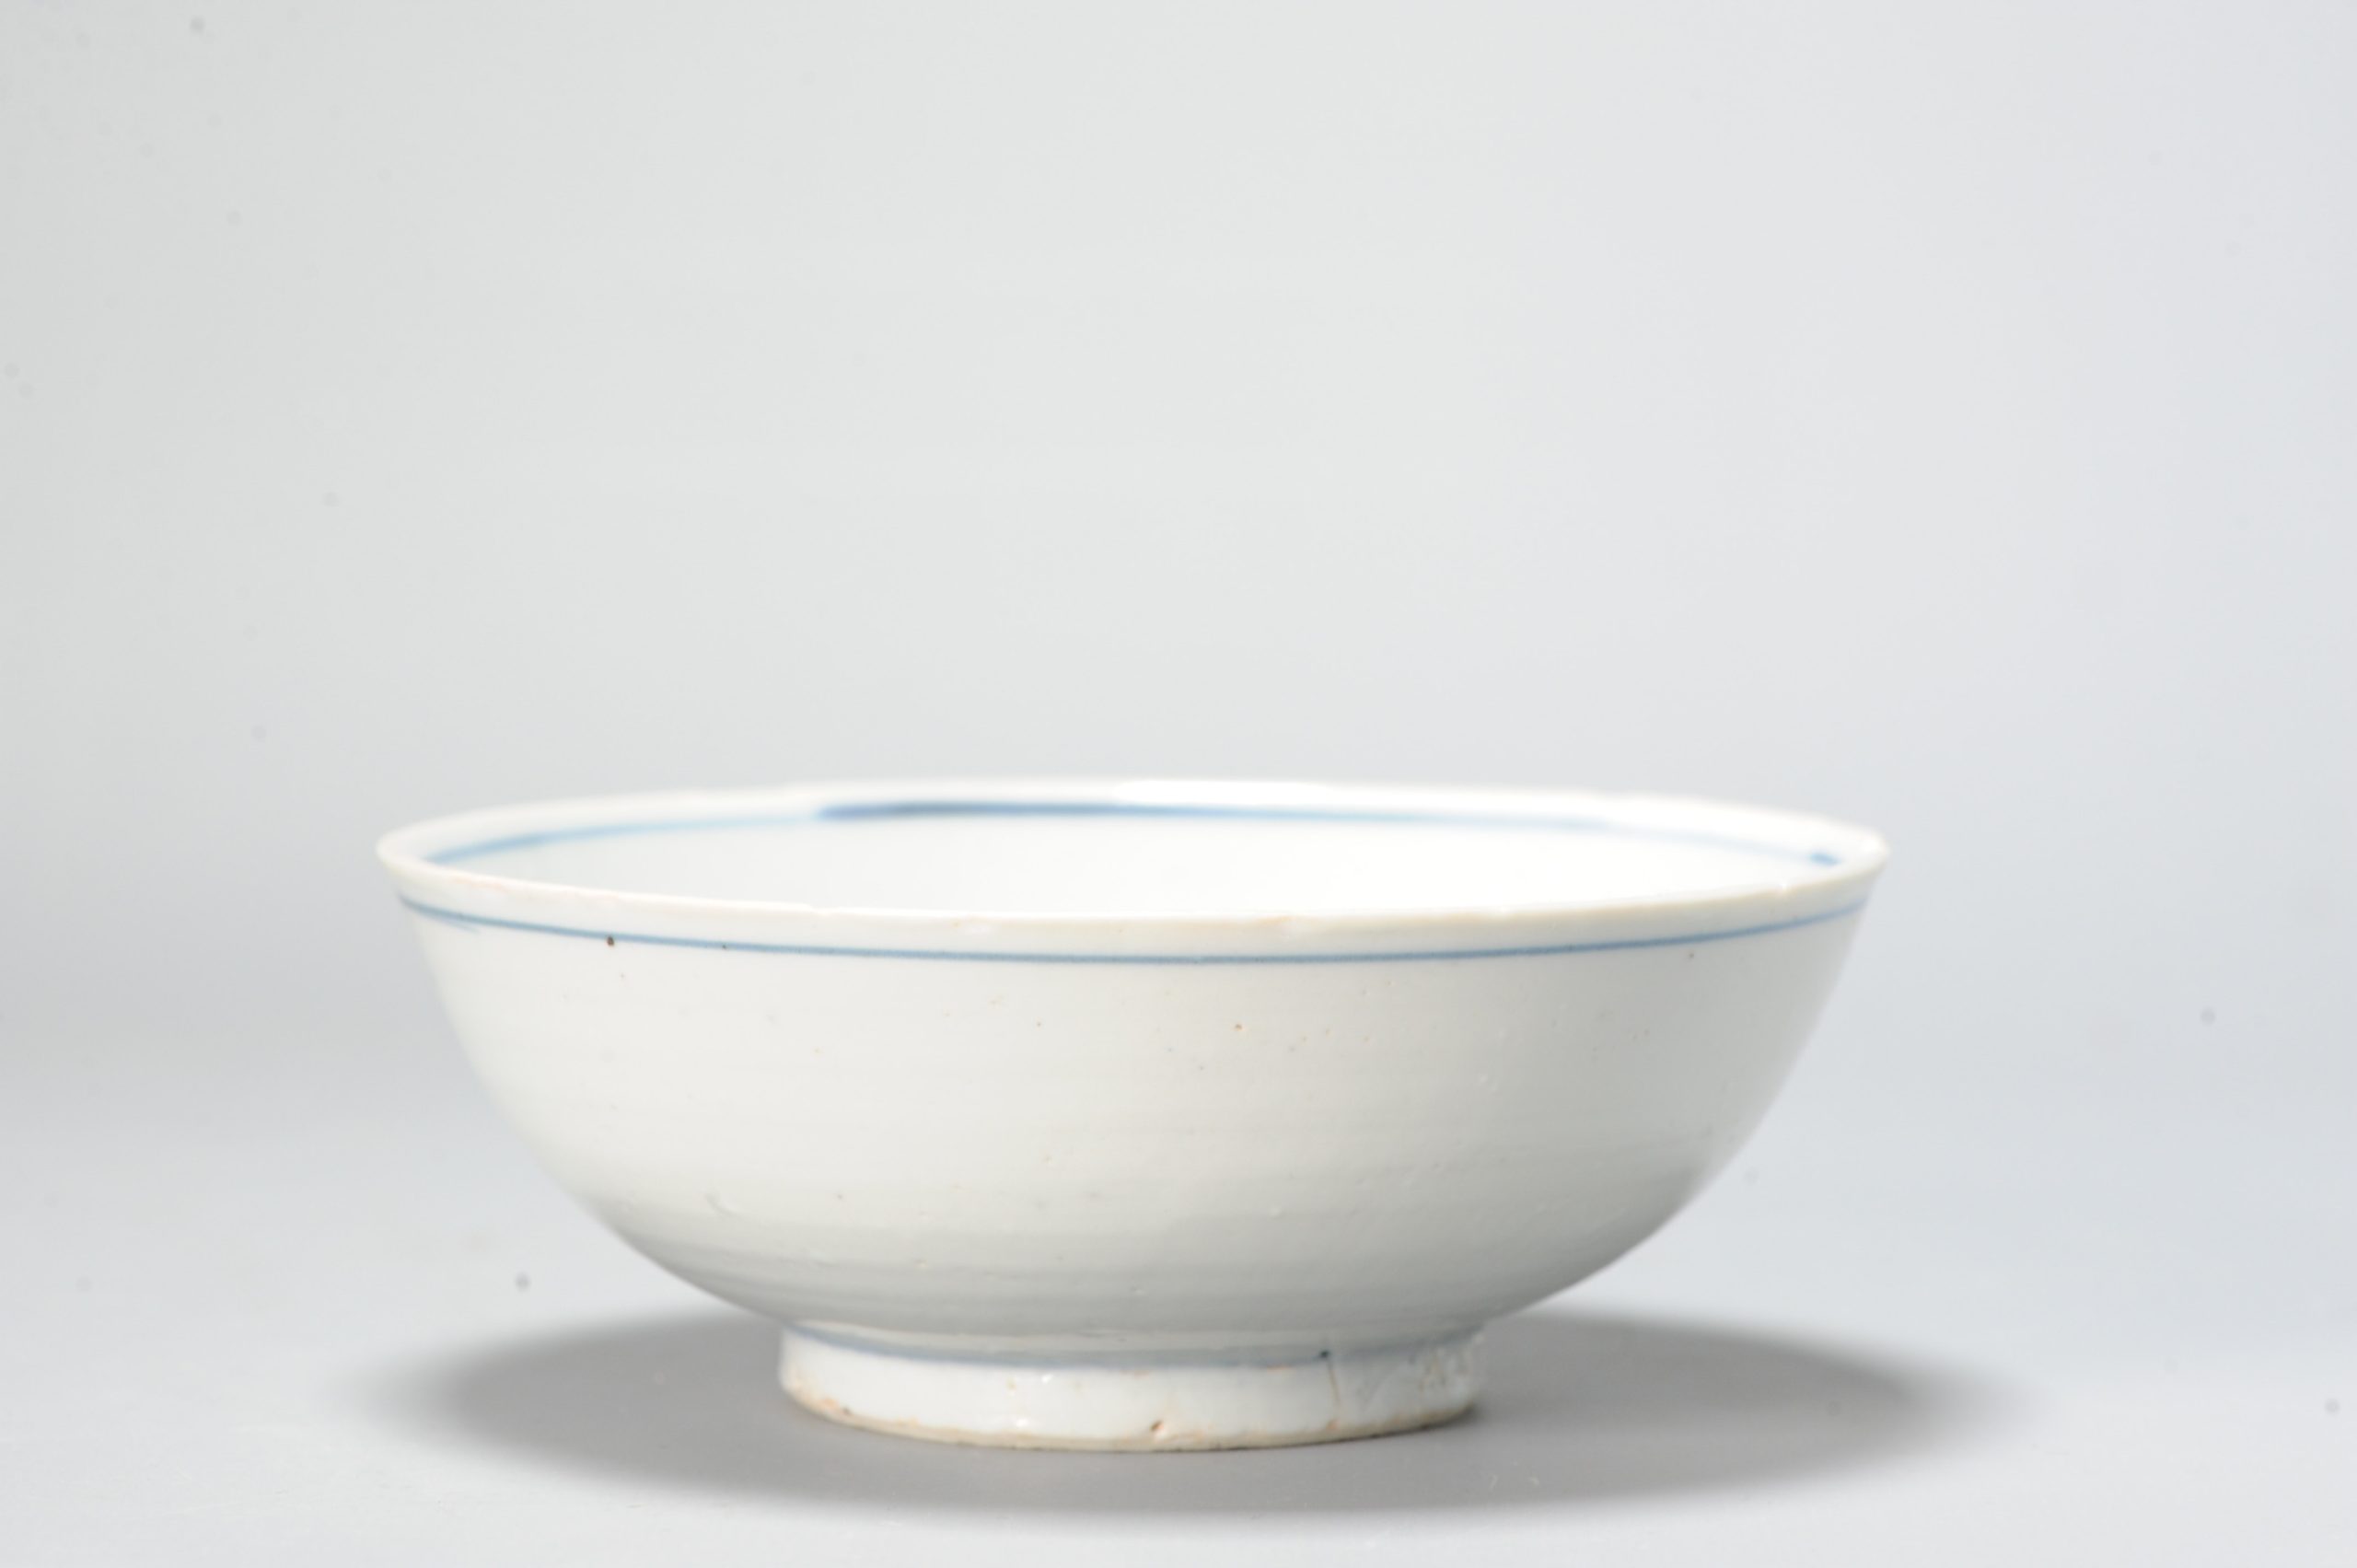 Rare Ca 1600-1640 Chinese Porcelain Ming Period Kosometsuke bowl